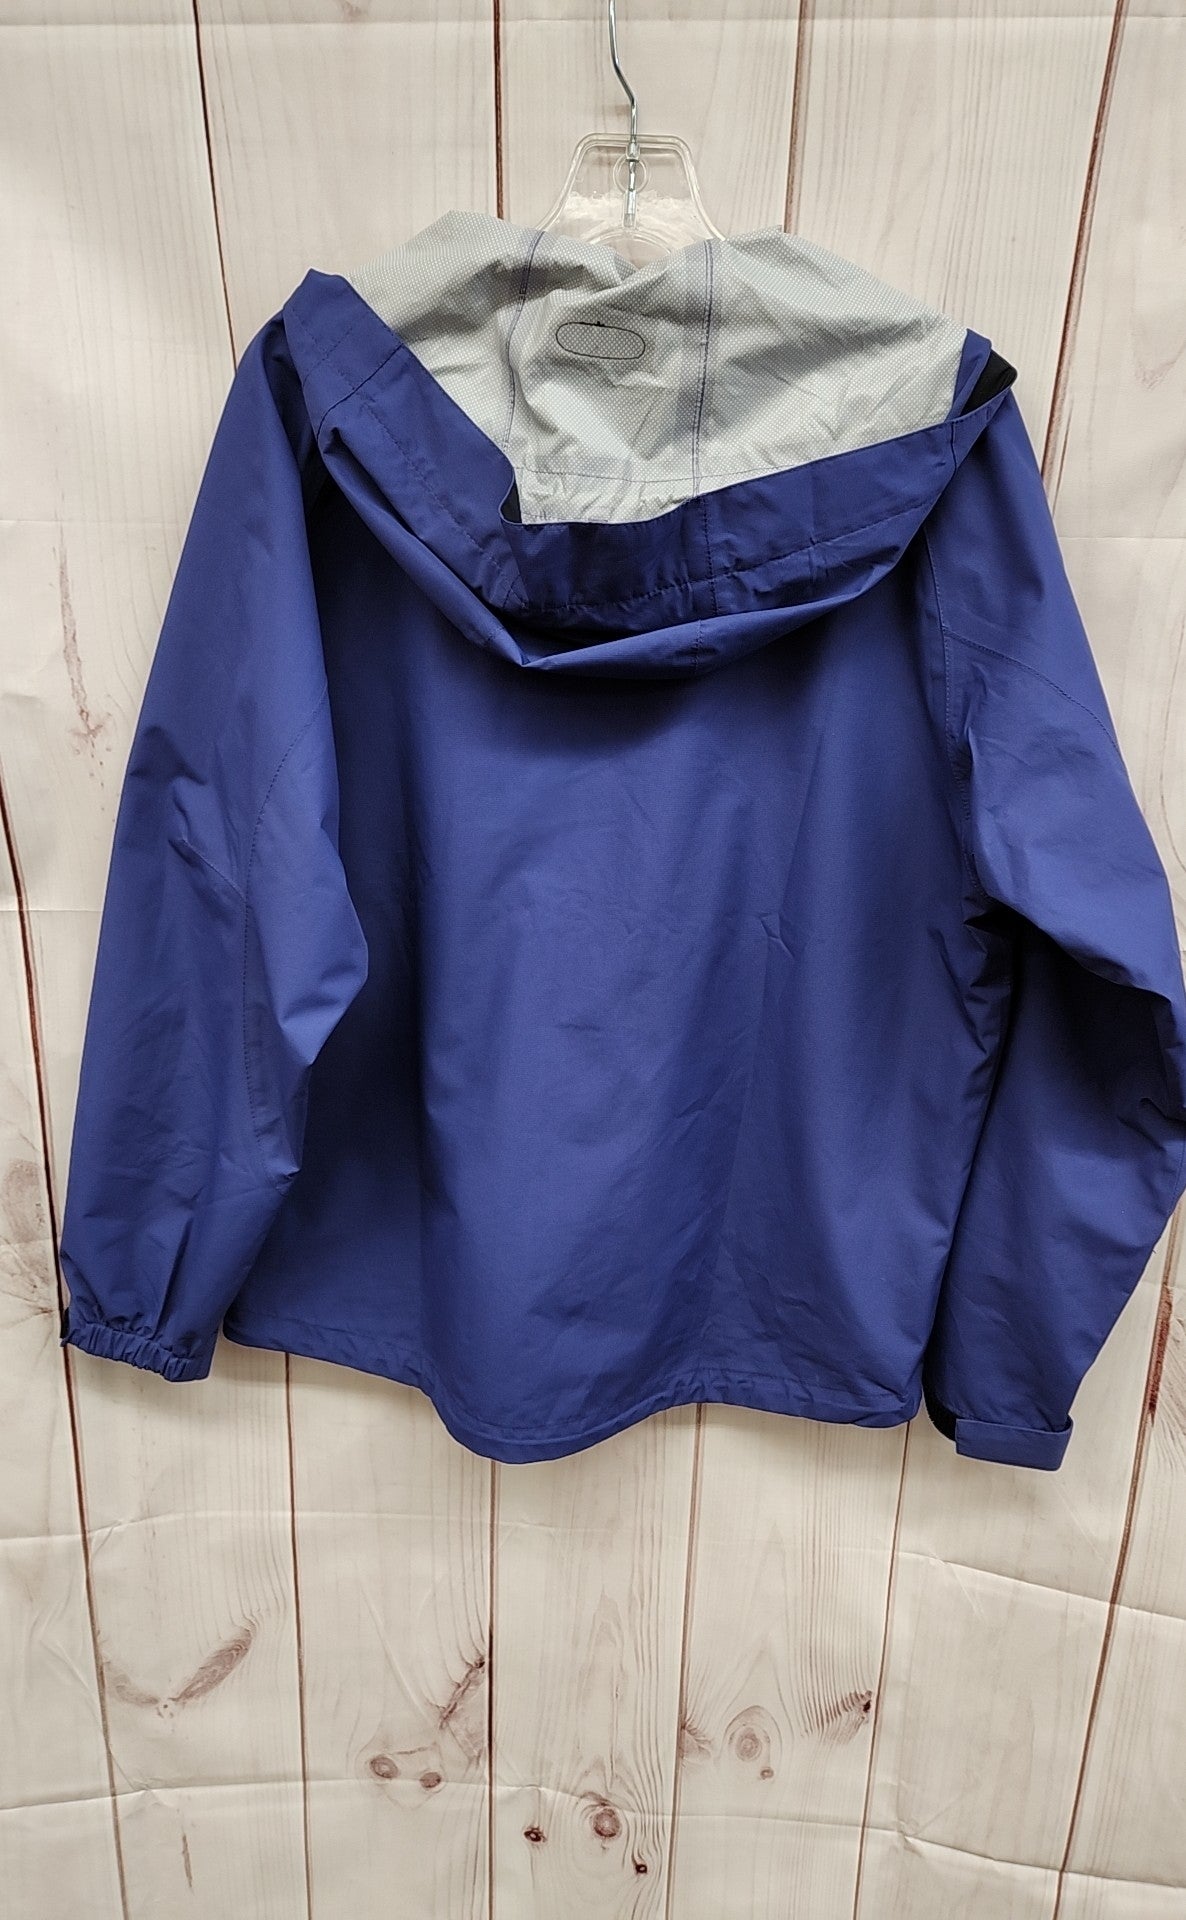 LL Bean Women's Size M Navy Raincoat